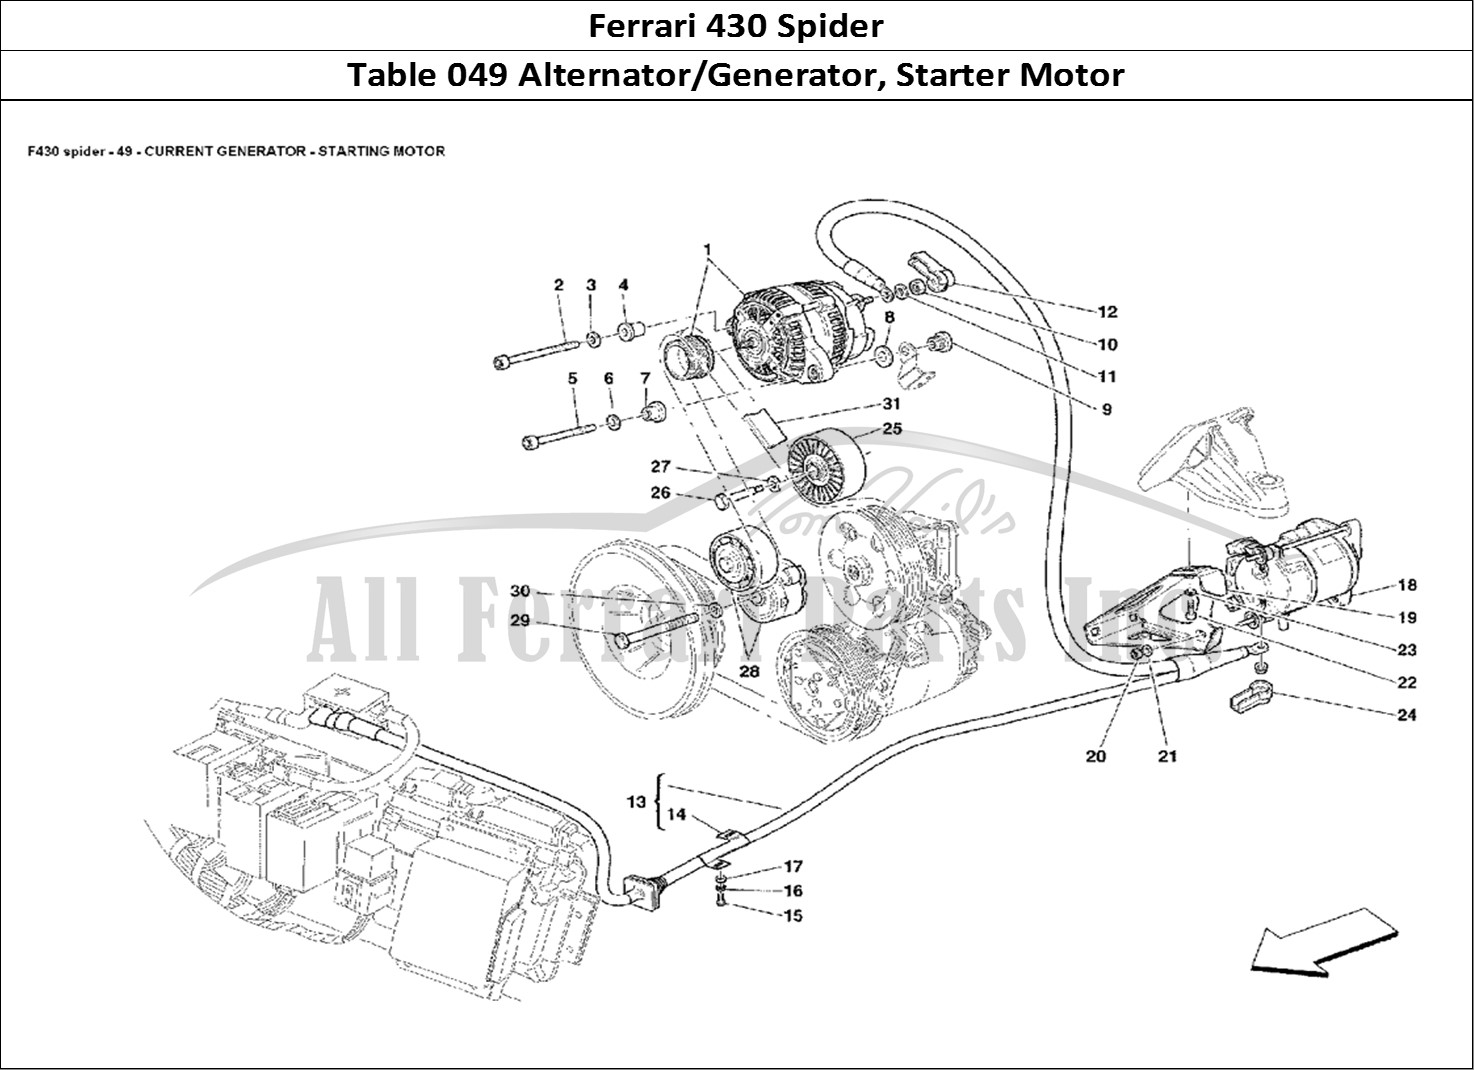 Ferrari Parts Ferrari 430 Spider Page 049 Current Generator - Start